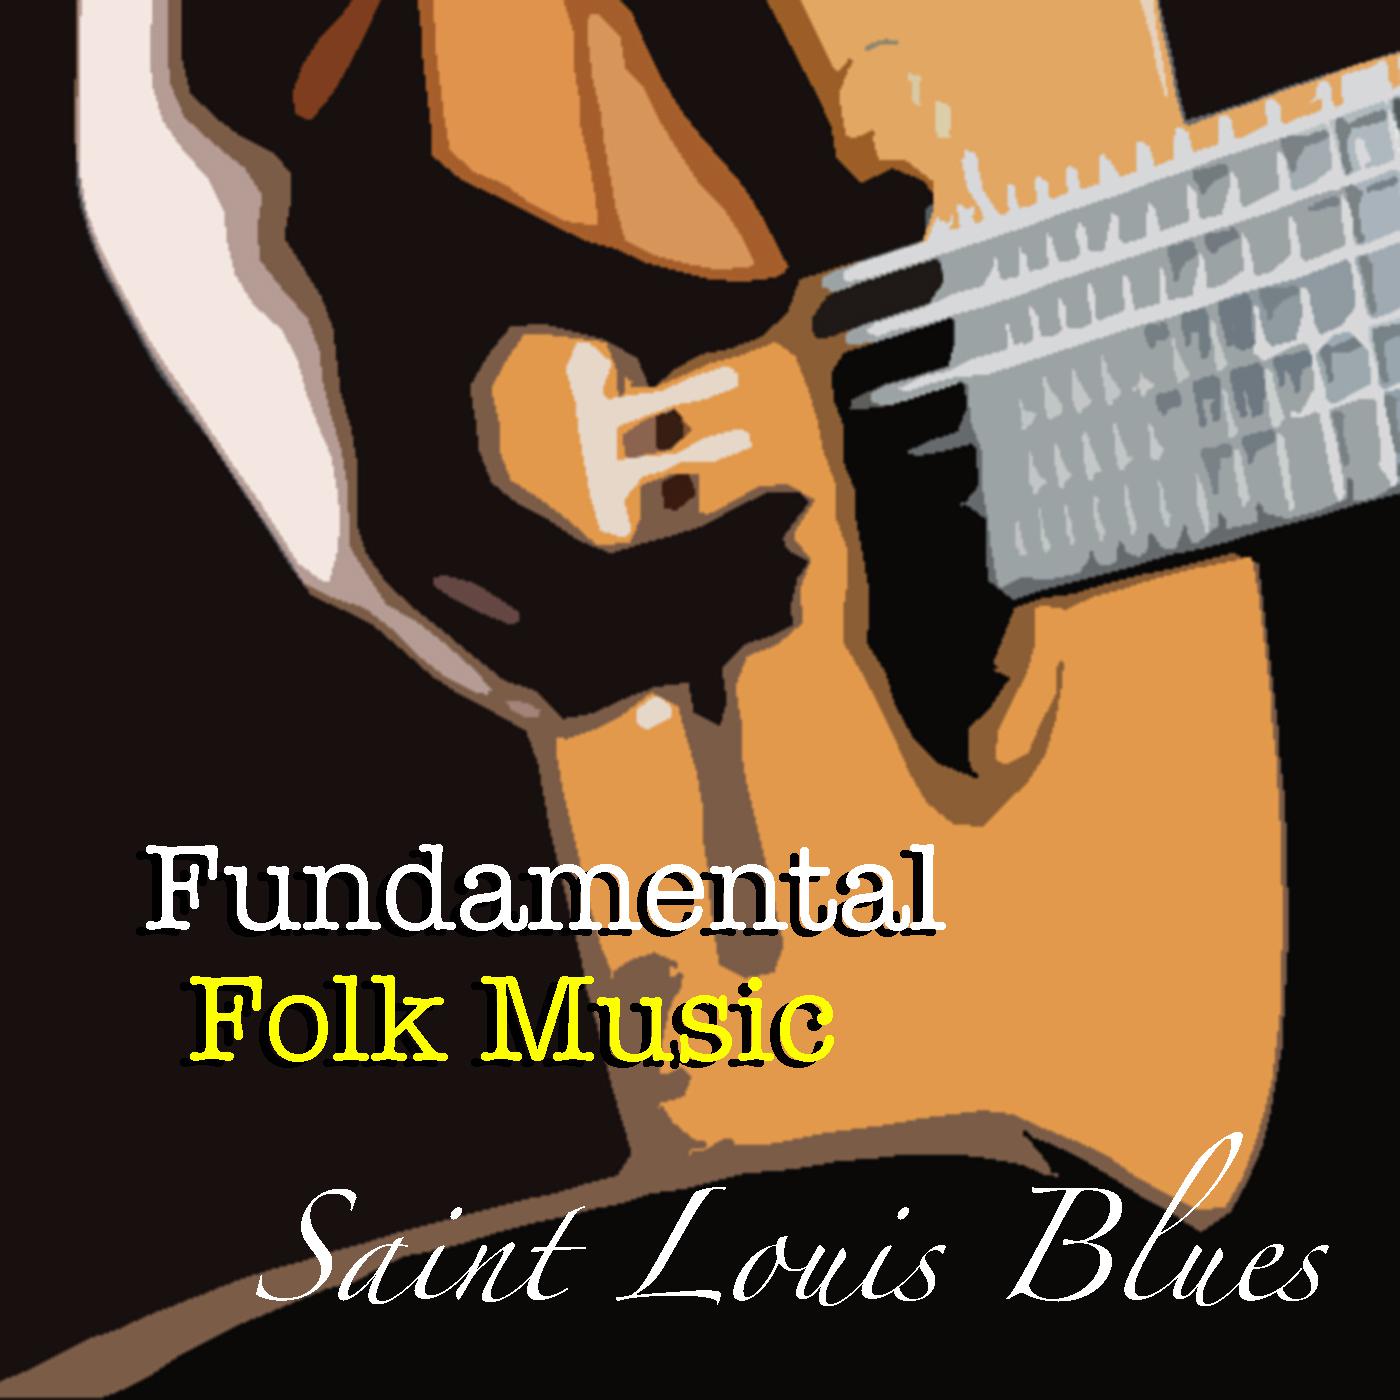 Saint Louis Blues Fundamental Folk Music